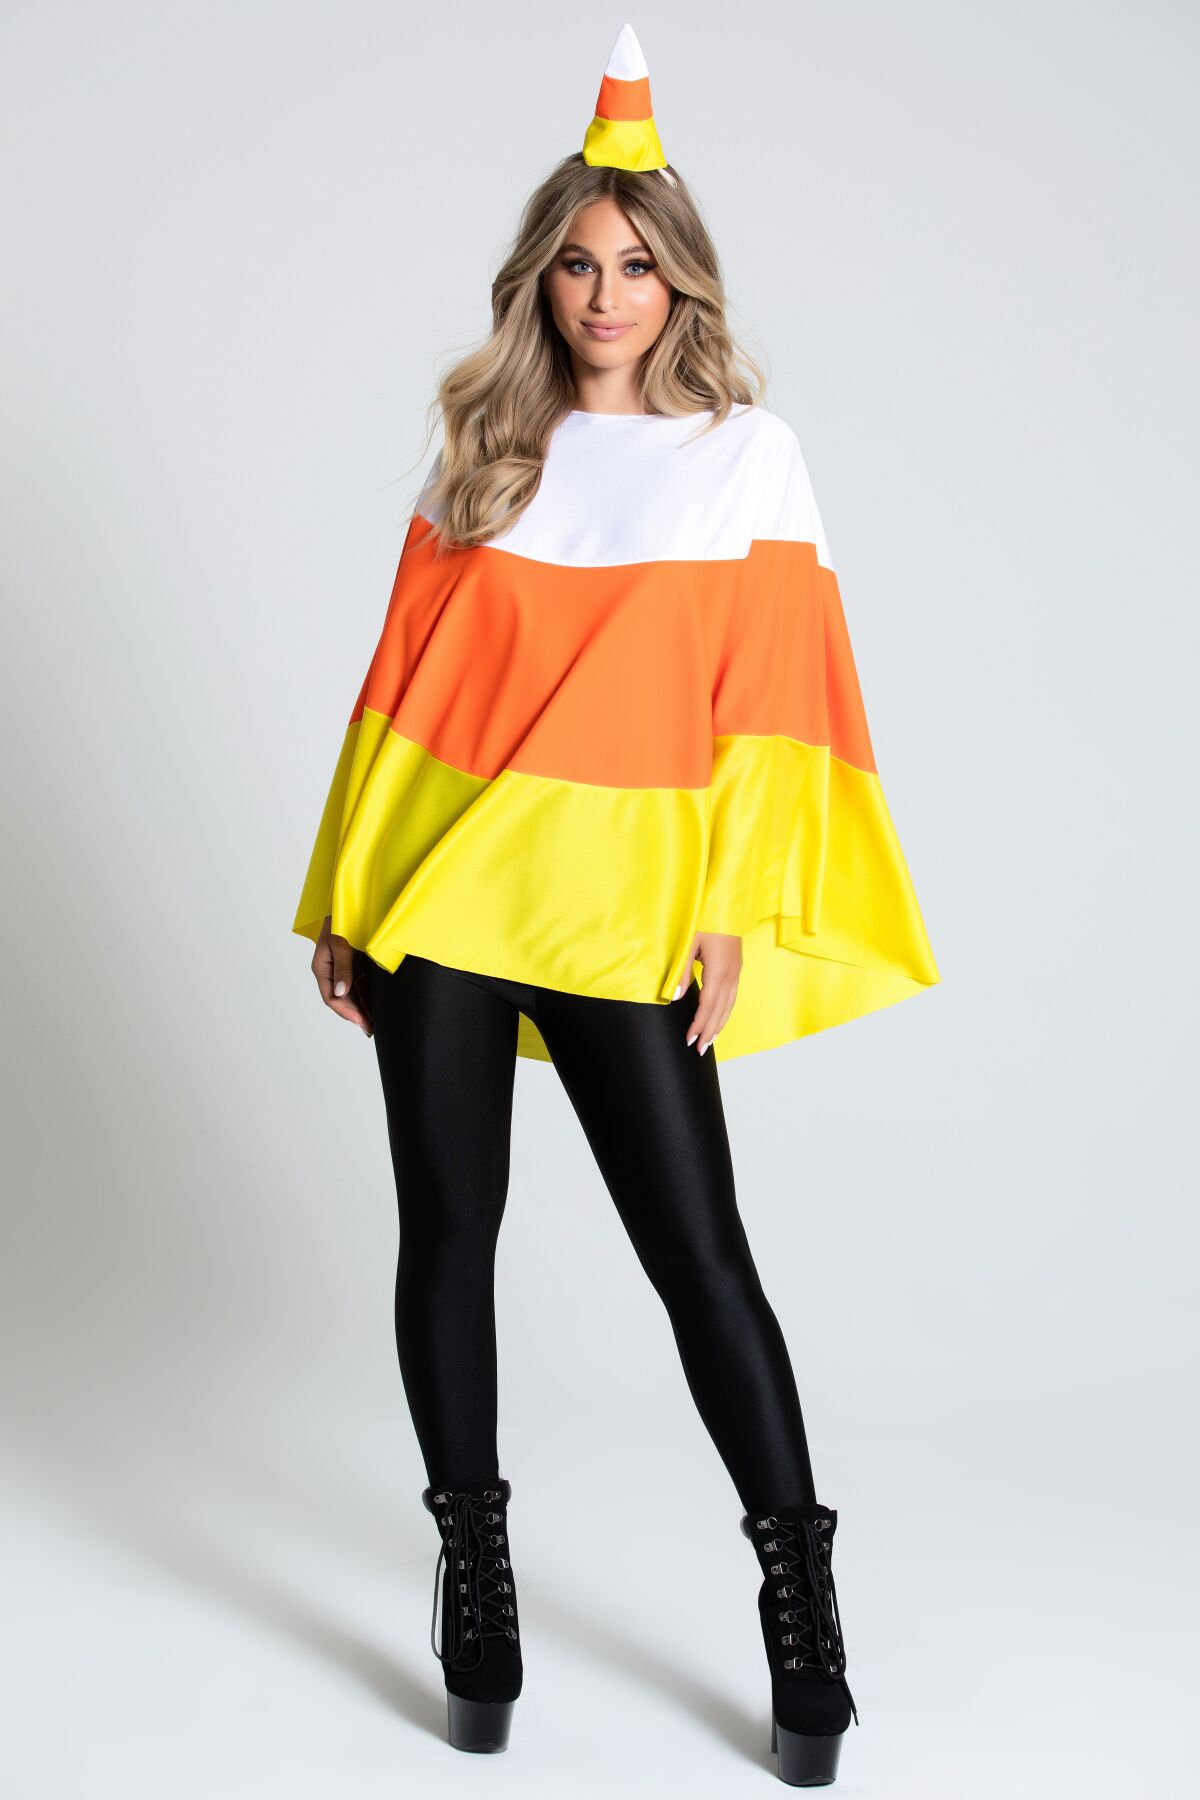 A model wears a candy corn costume.